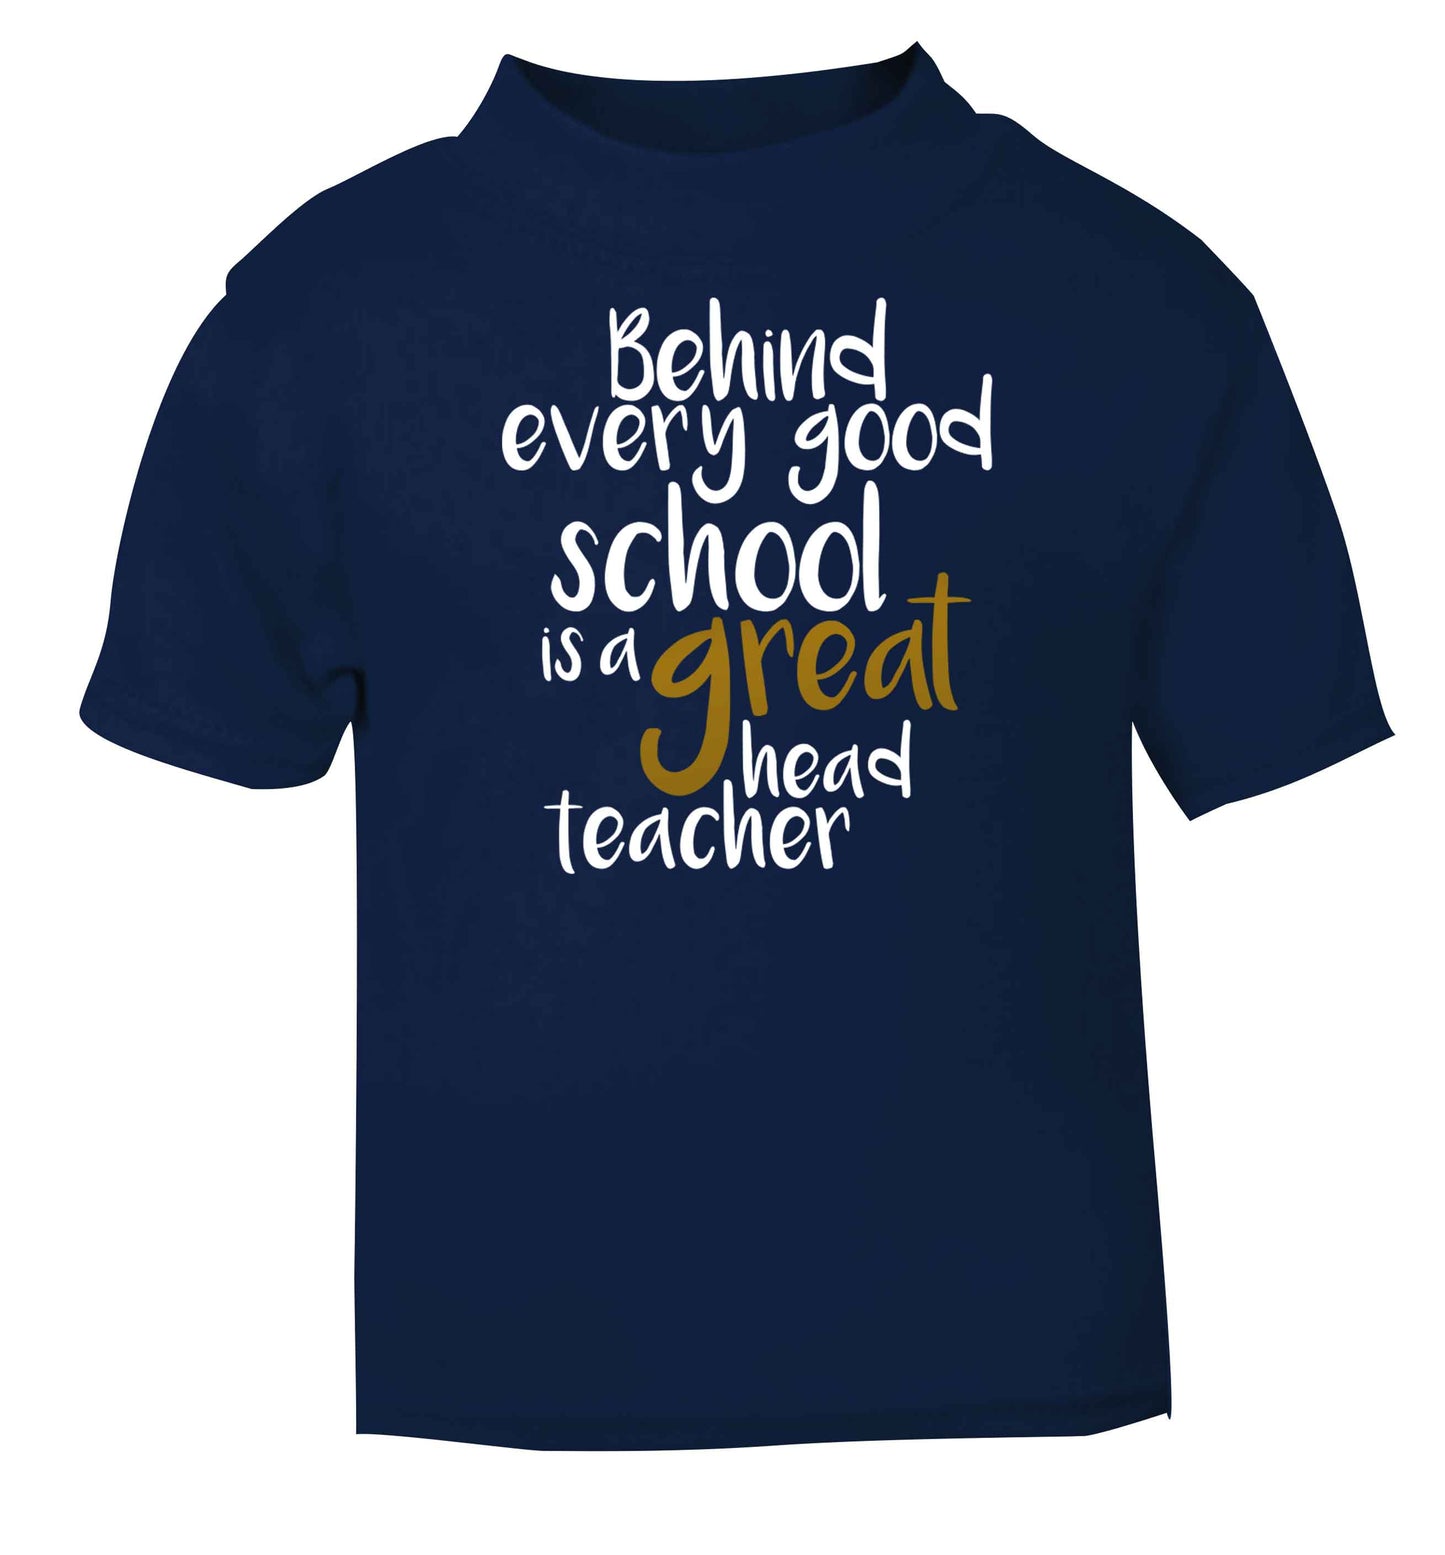 Behind every good school is a great head teacher navy baby toddler Tshirt 2 Years